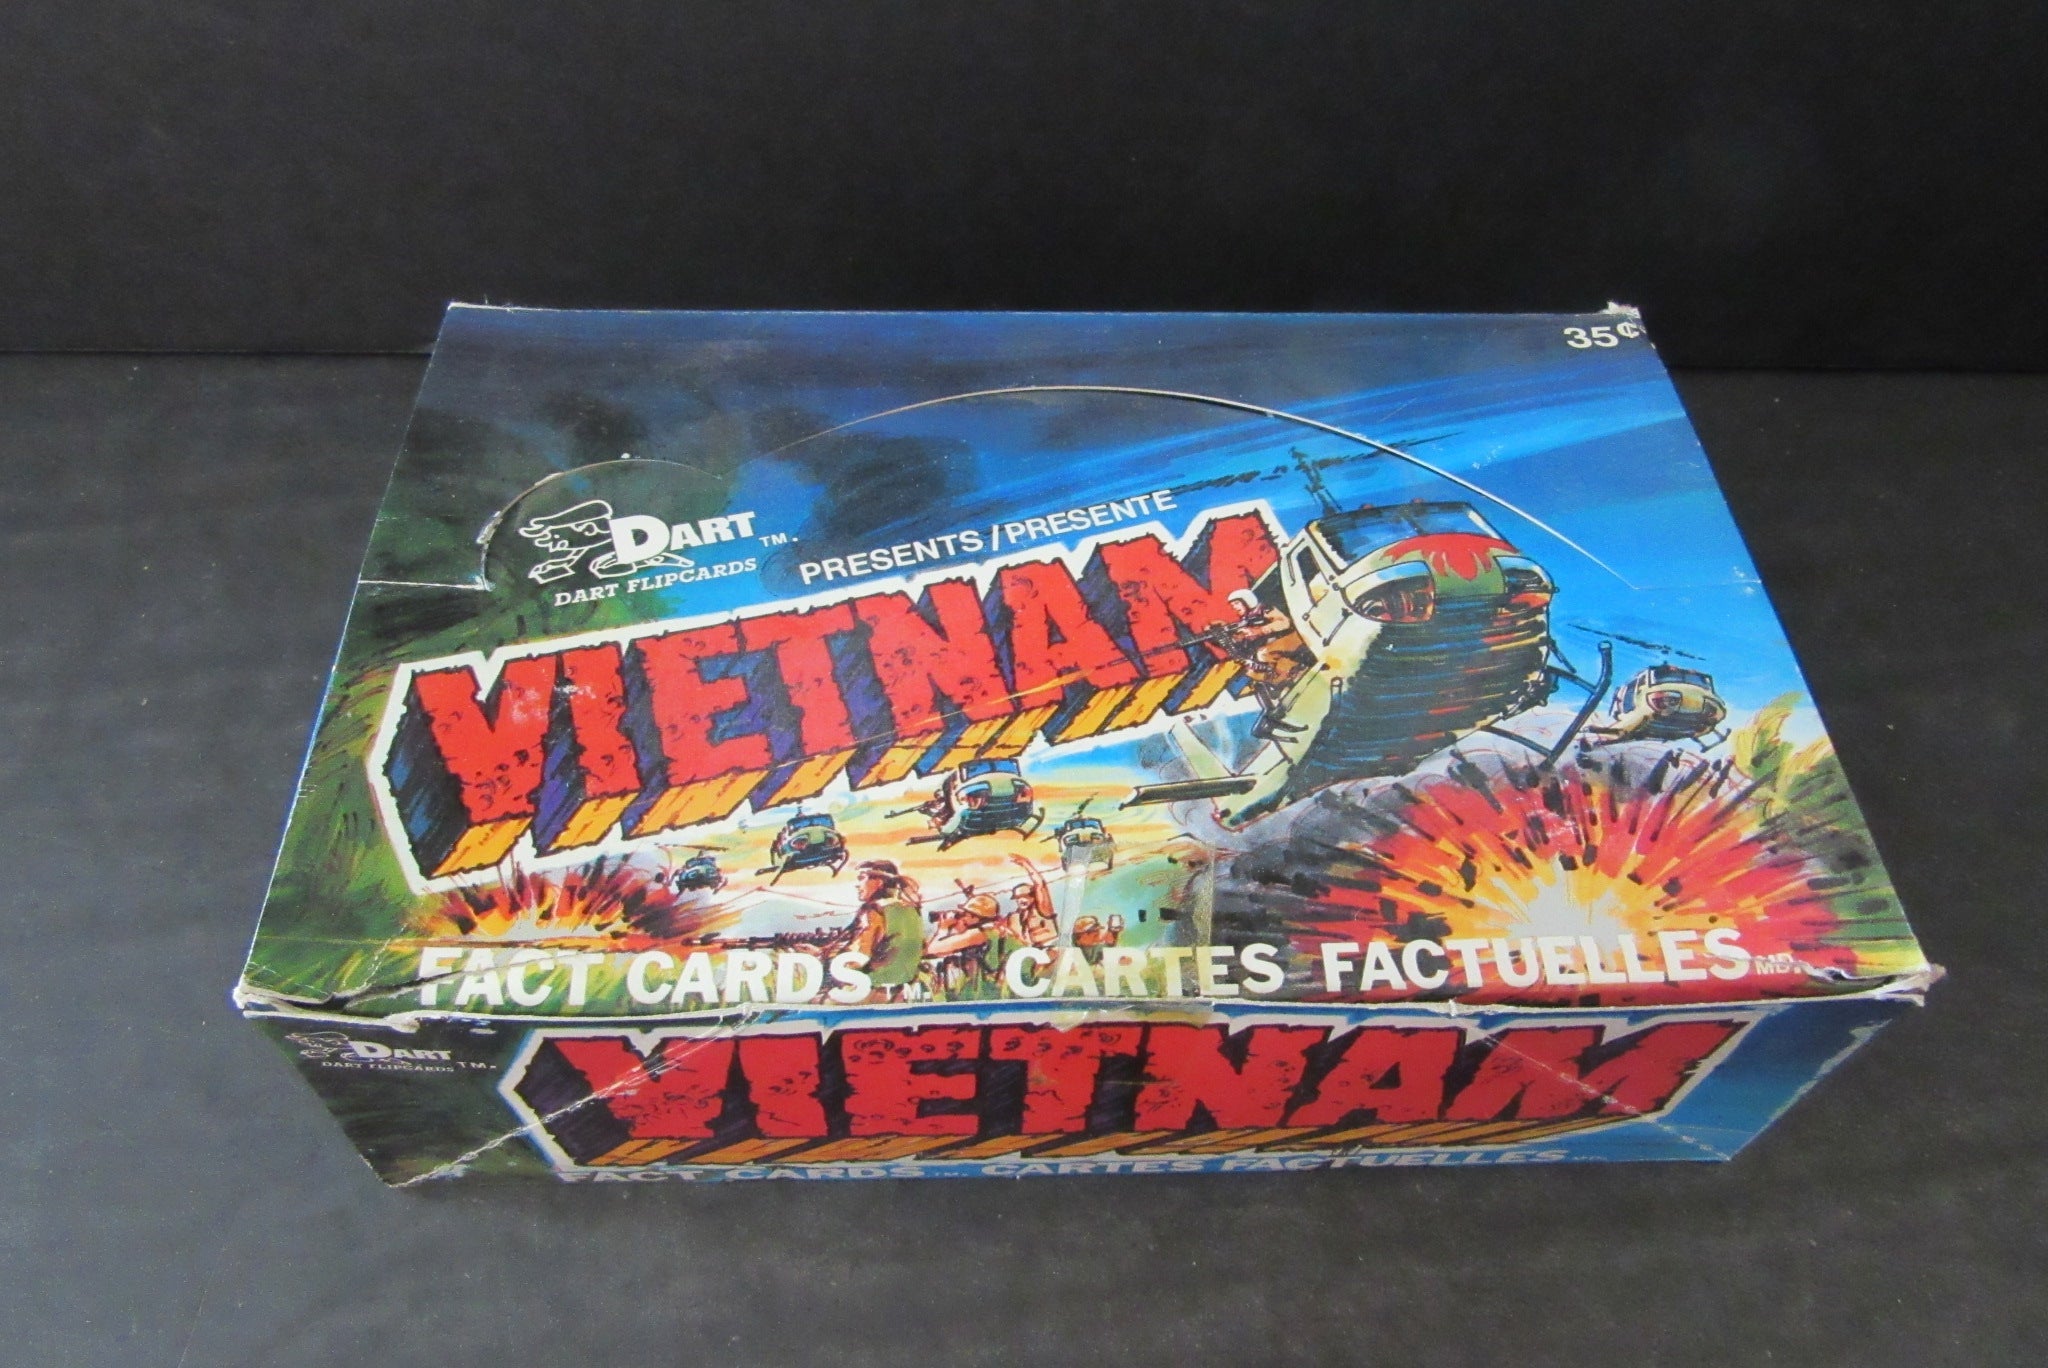 1988 Dart Vietnam Fact Card Unopened Box (Authenticate)